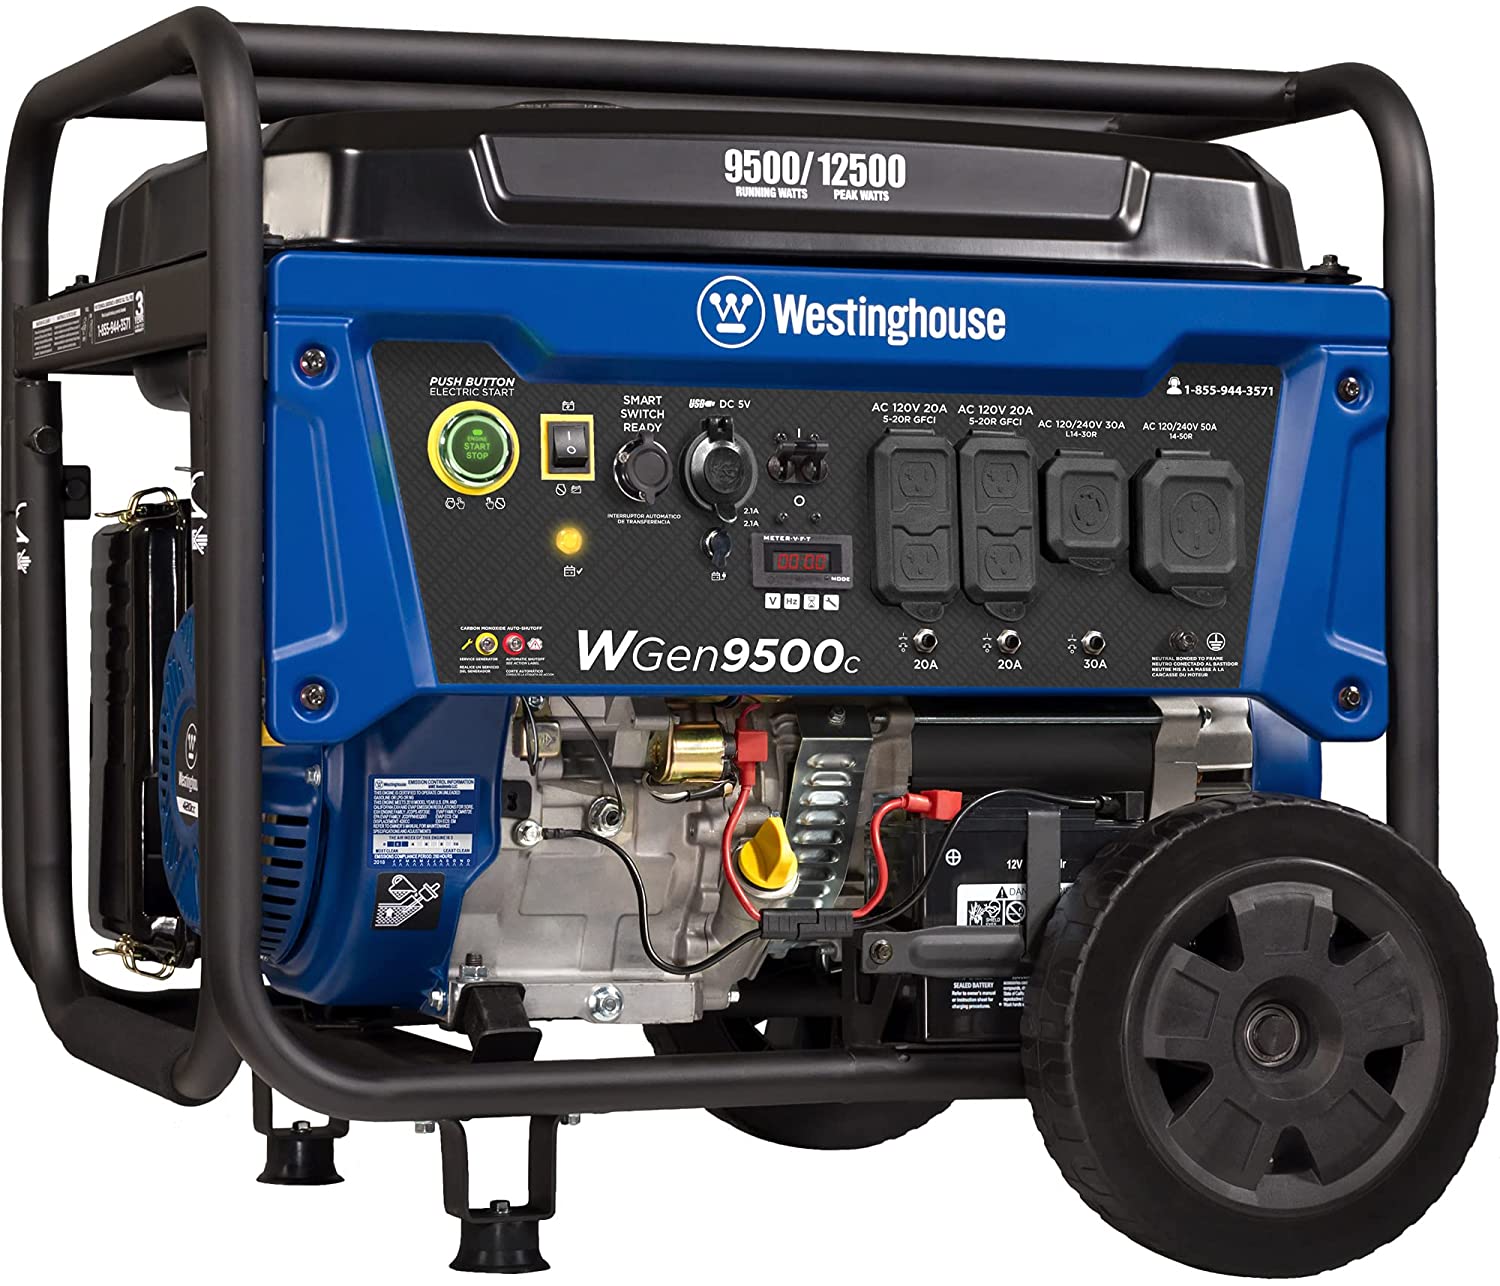 Westinghouse Outdoor Power Equipment WGen9500c Portable Generator